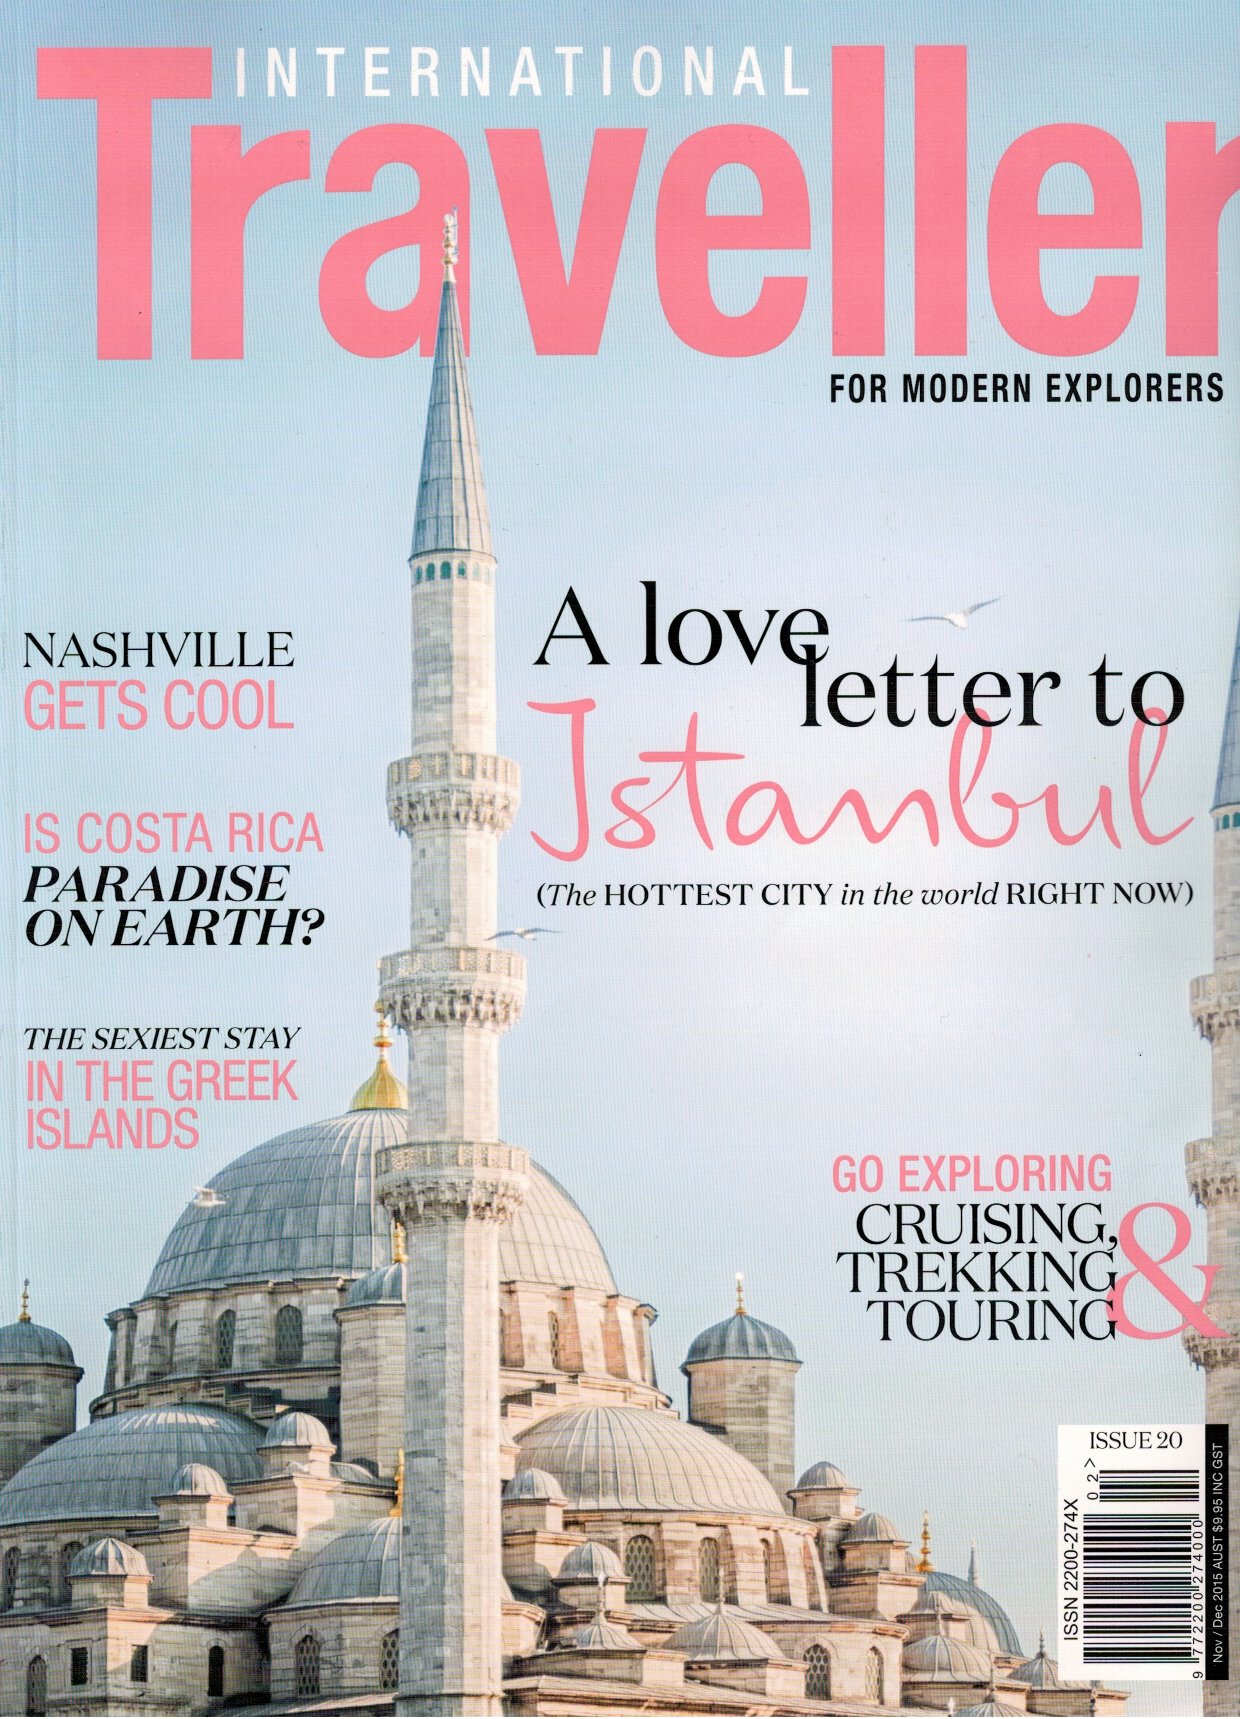 International Traveller magazine